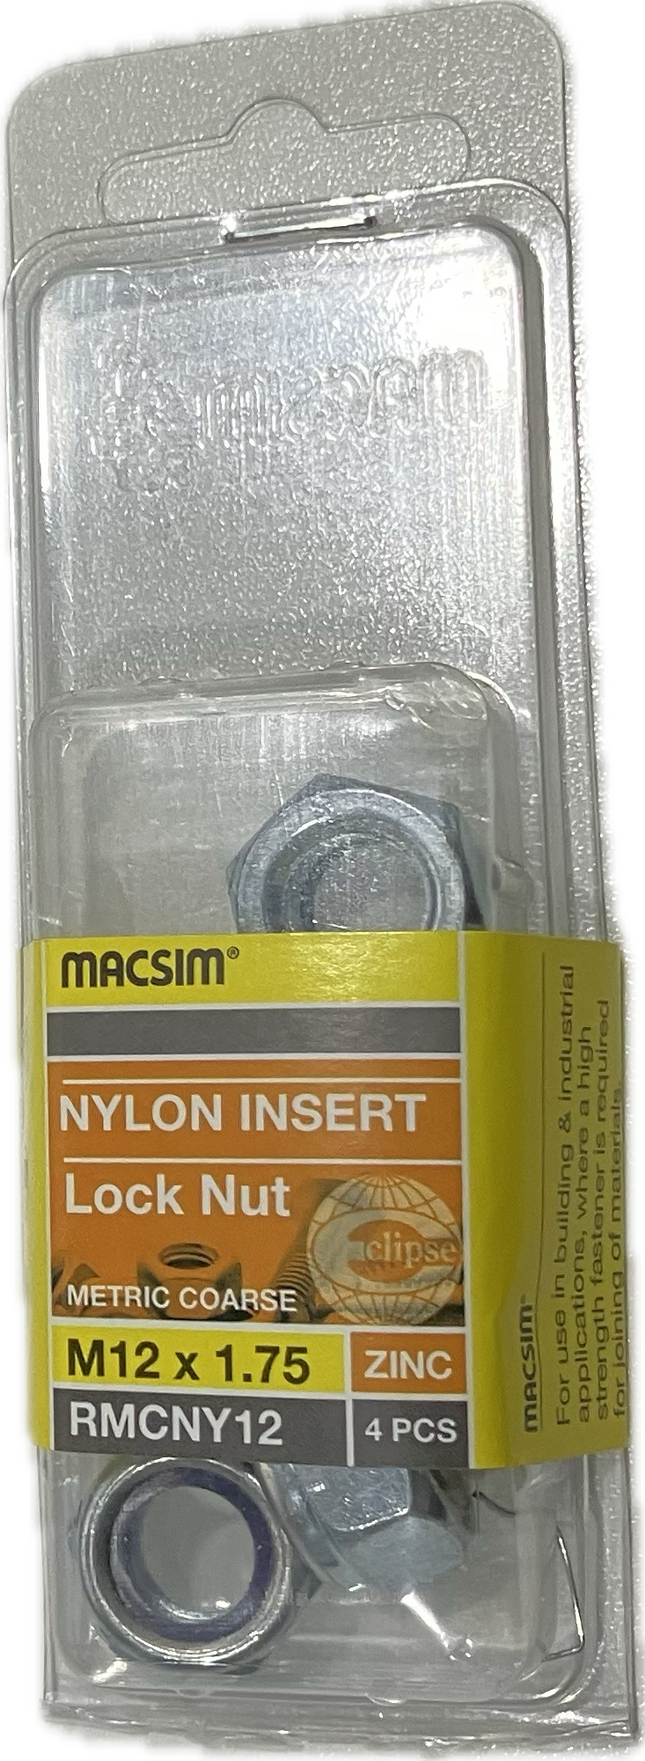 MACSIM HEX HEAD MATRIC COARSE NYLON INSERT ZINC PLATED M12 LOCK NUT (BLISTER PACK OF 4)